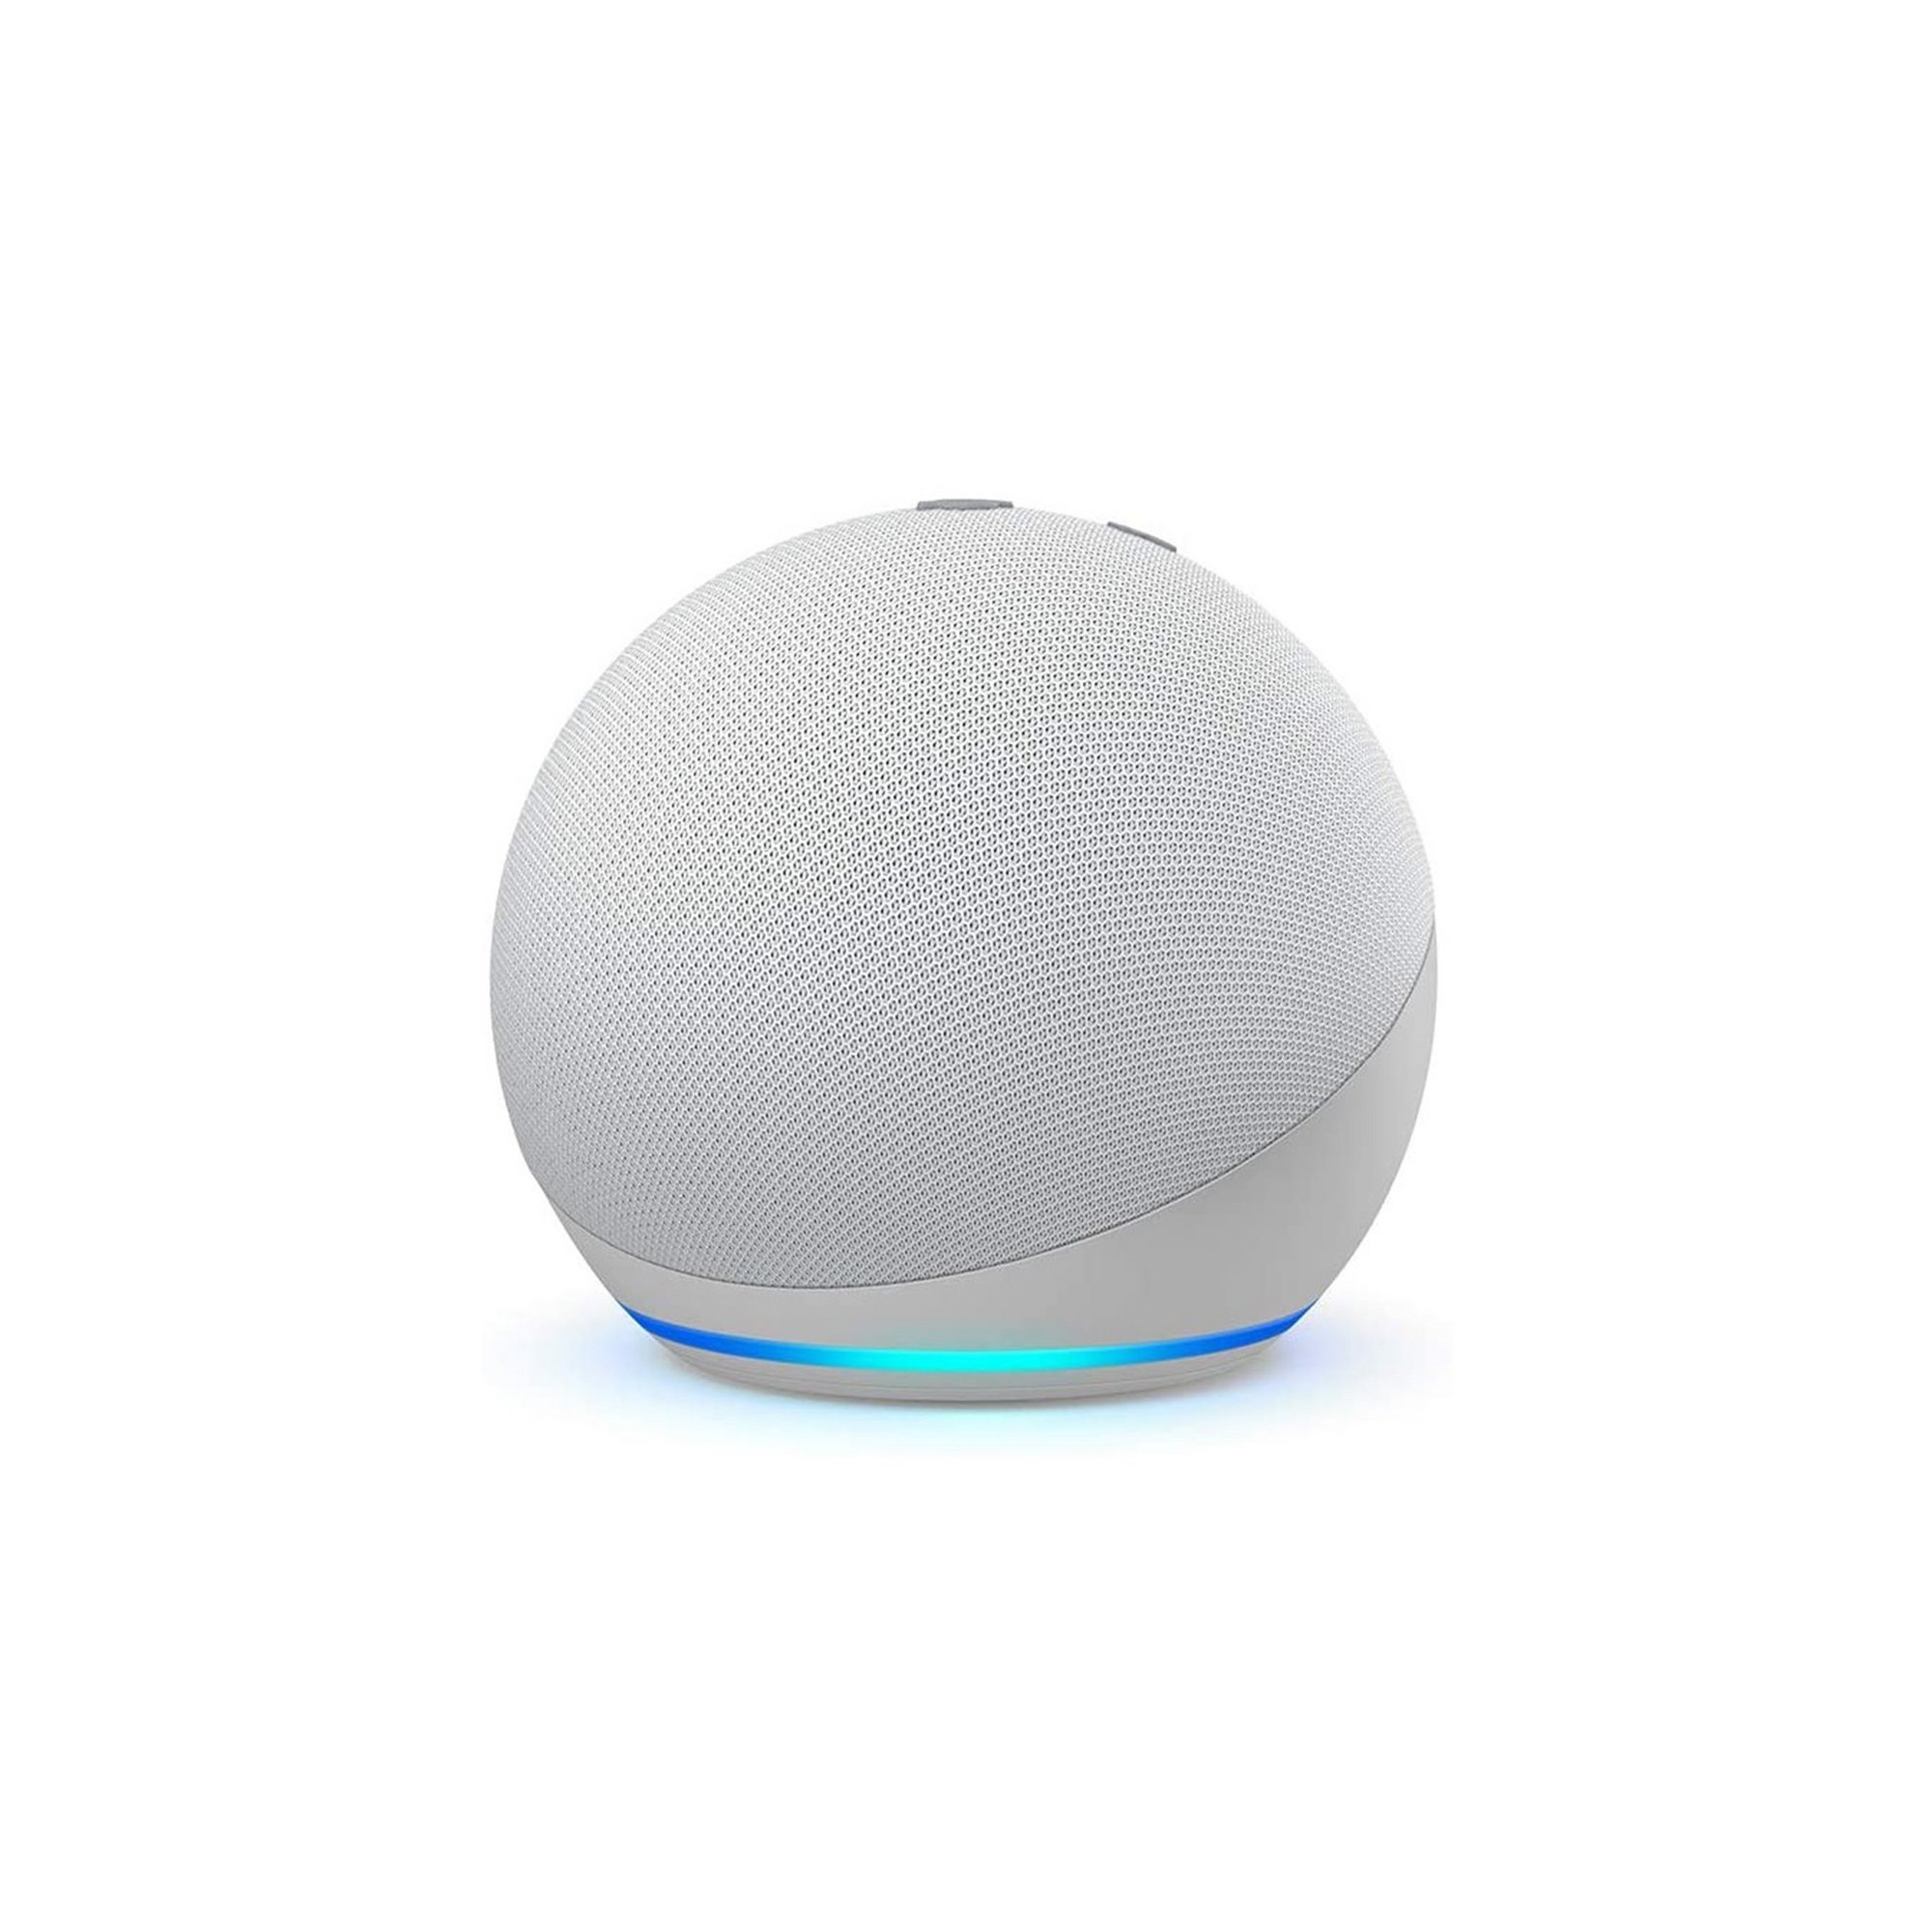 Amazon 4th Generation Echo Dot Smart Speaker with Alexa